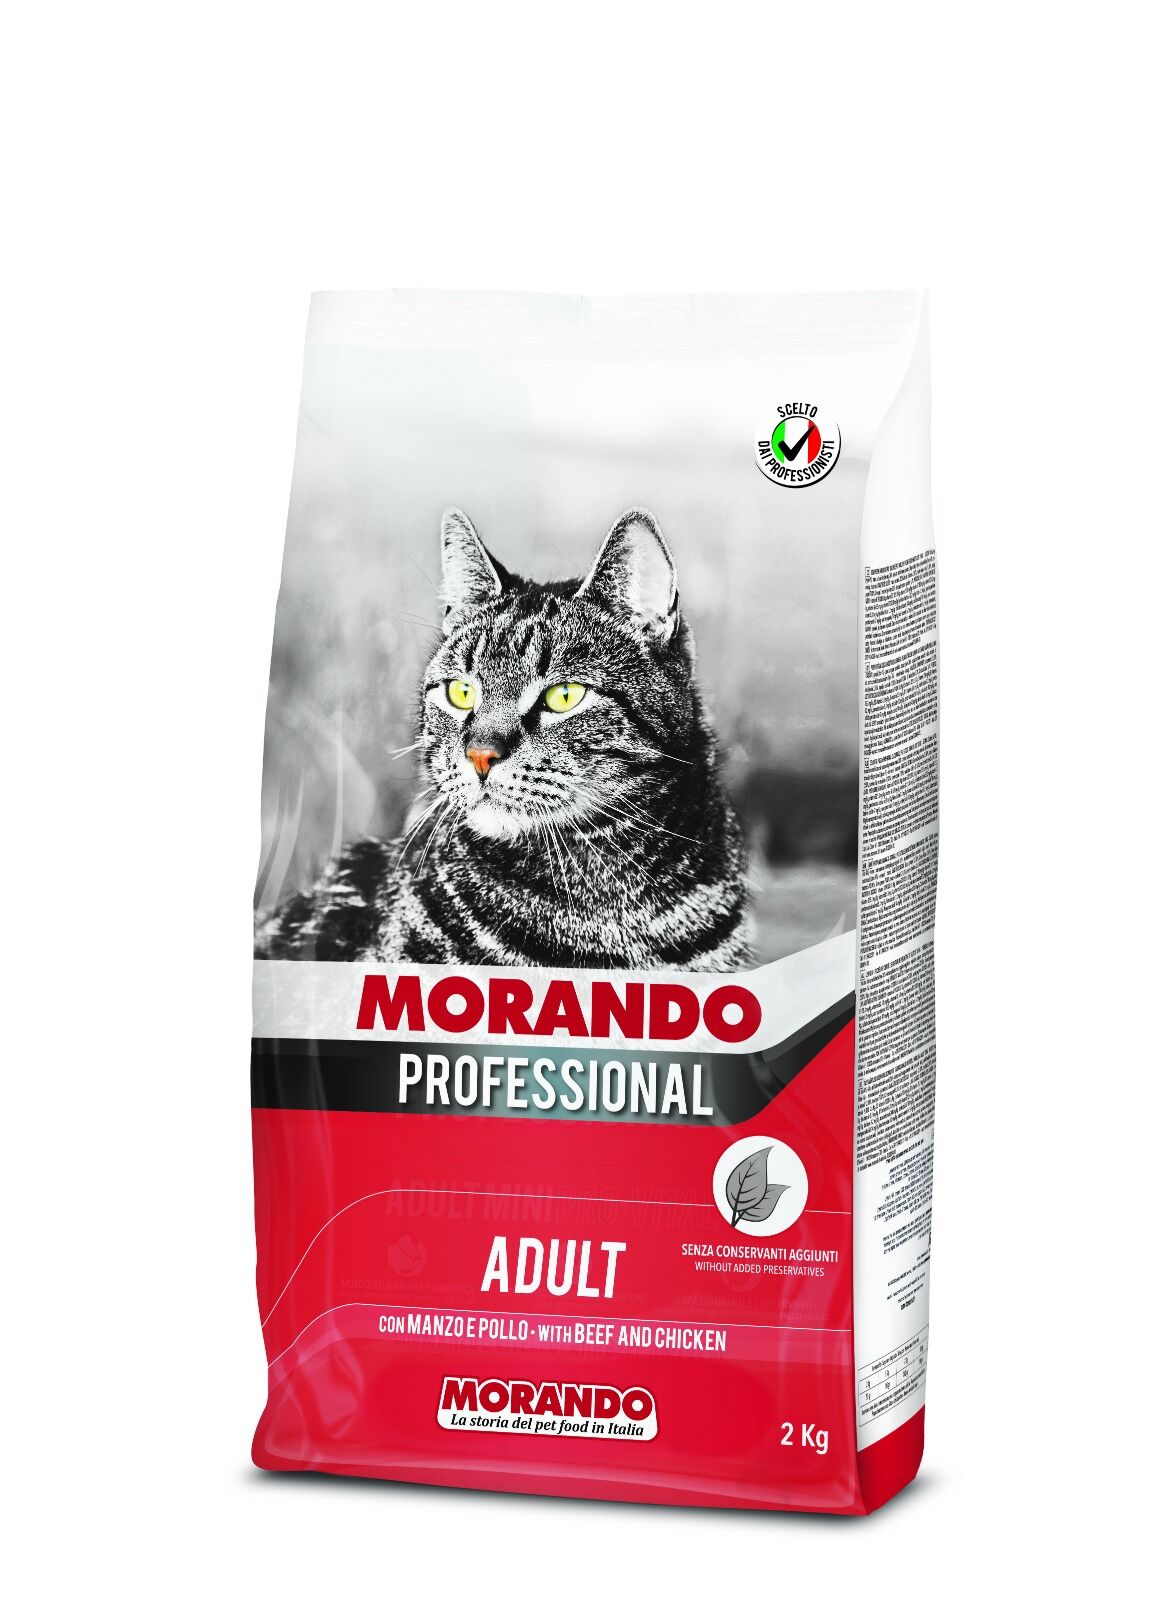 Morando Biftekli&Tavuklu Yetişkin Kedi Maması 2kg